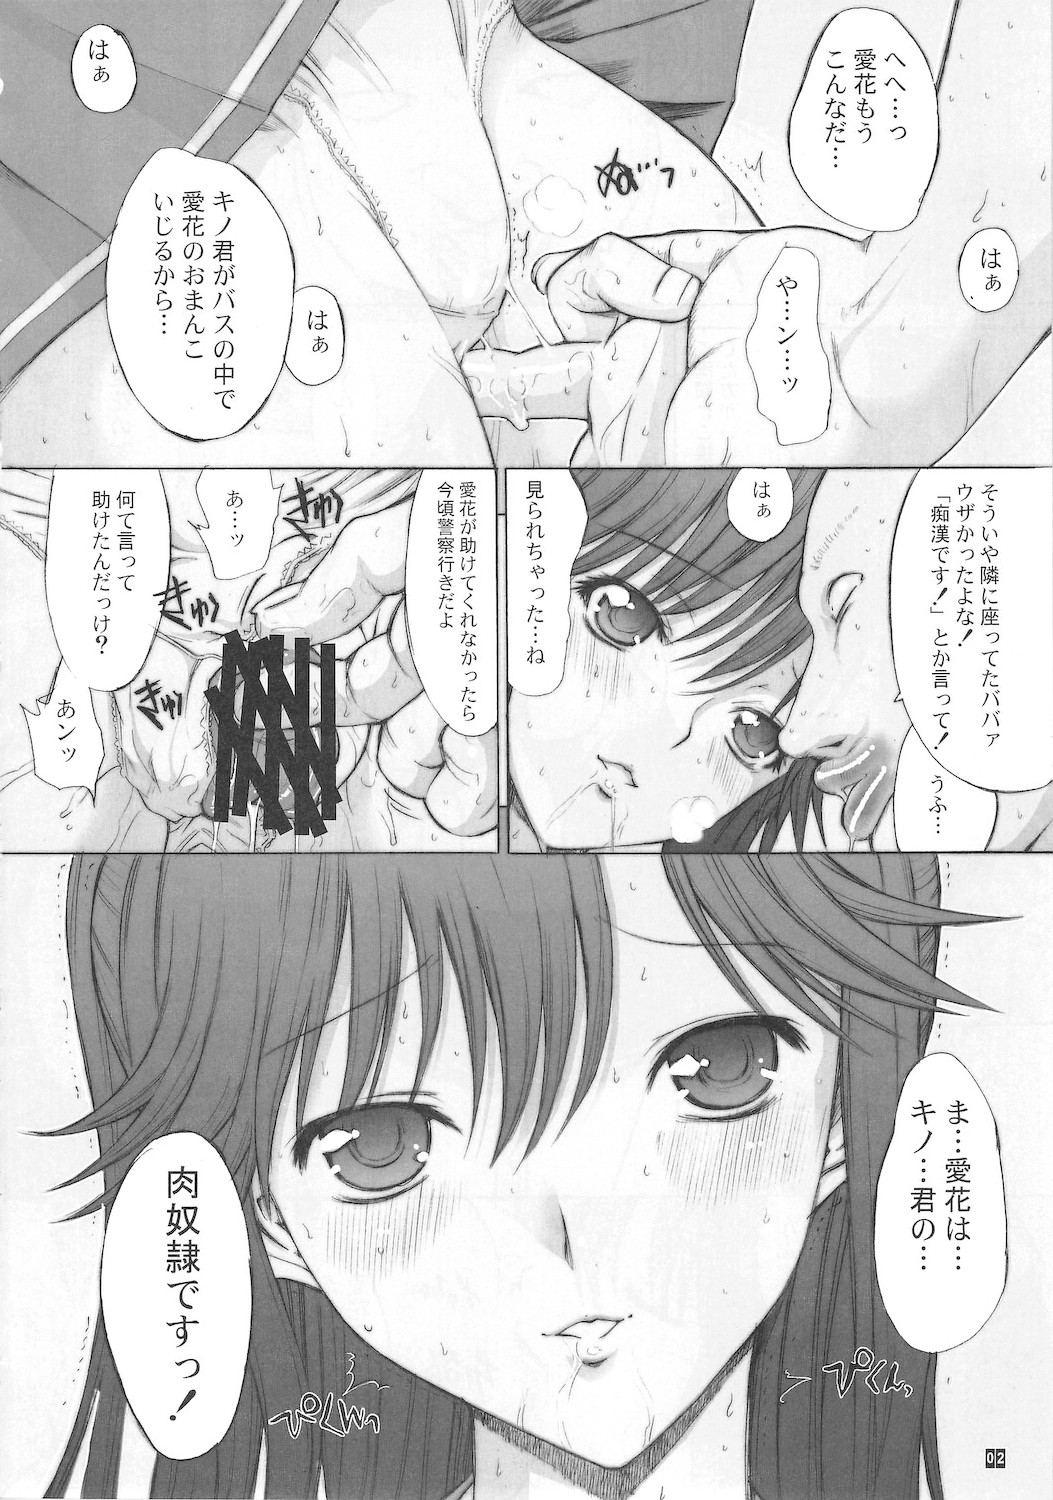 (C78) (同人誌) [鬼ノ漫画設計室 (鬼ノ仁)] ORE TO MANAKA NO SEX NIKKI (ラブプラス)